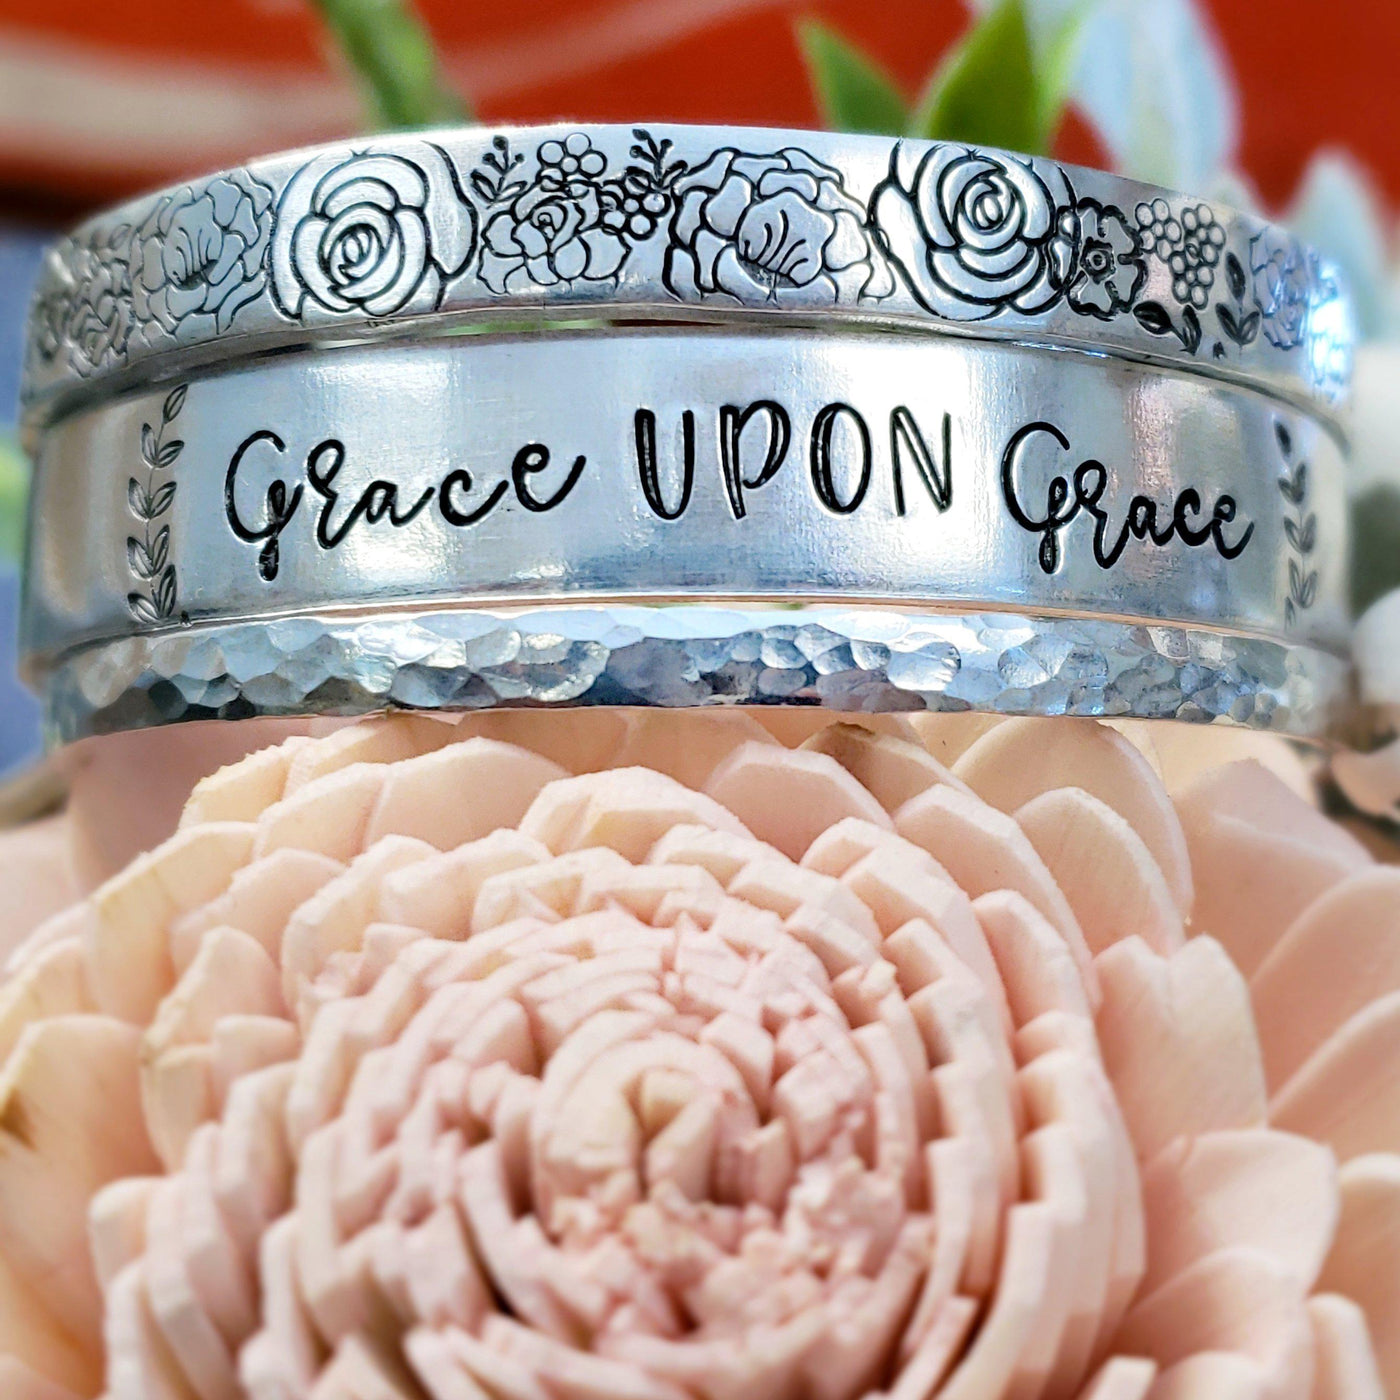 Custom Name Couple/Wedding/Anniversary Cuff Bracelet | Bracelets - Little Blue Bus Jewelry